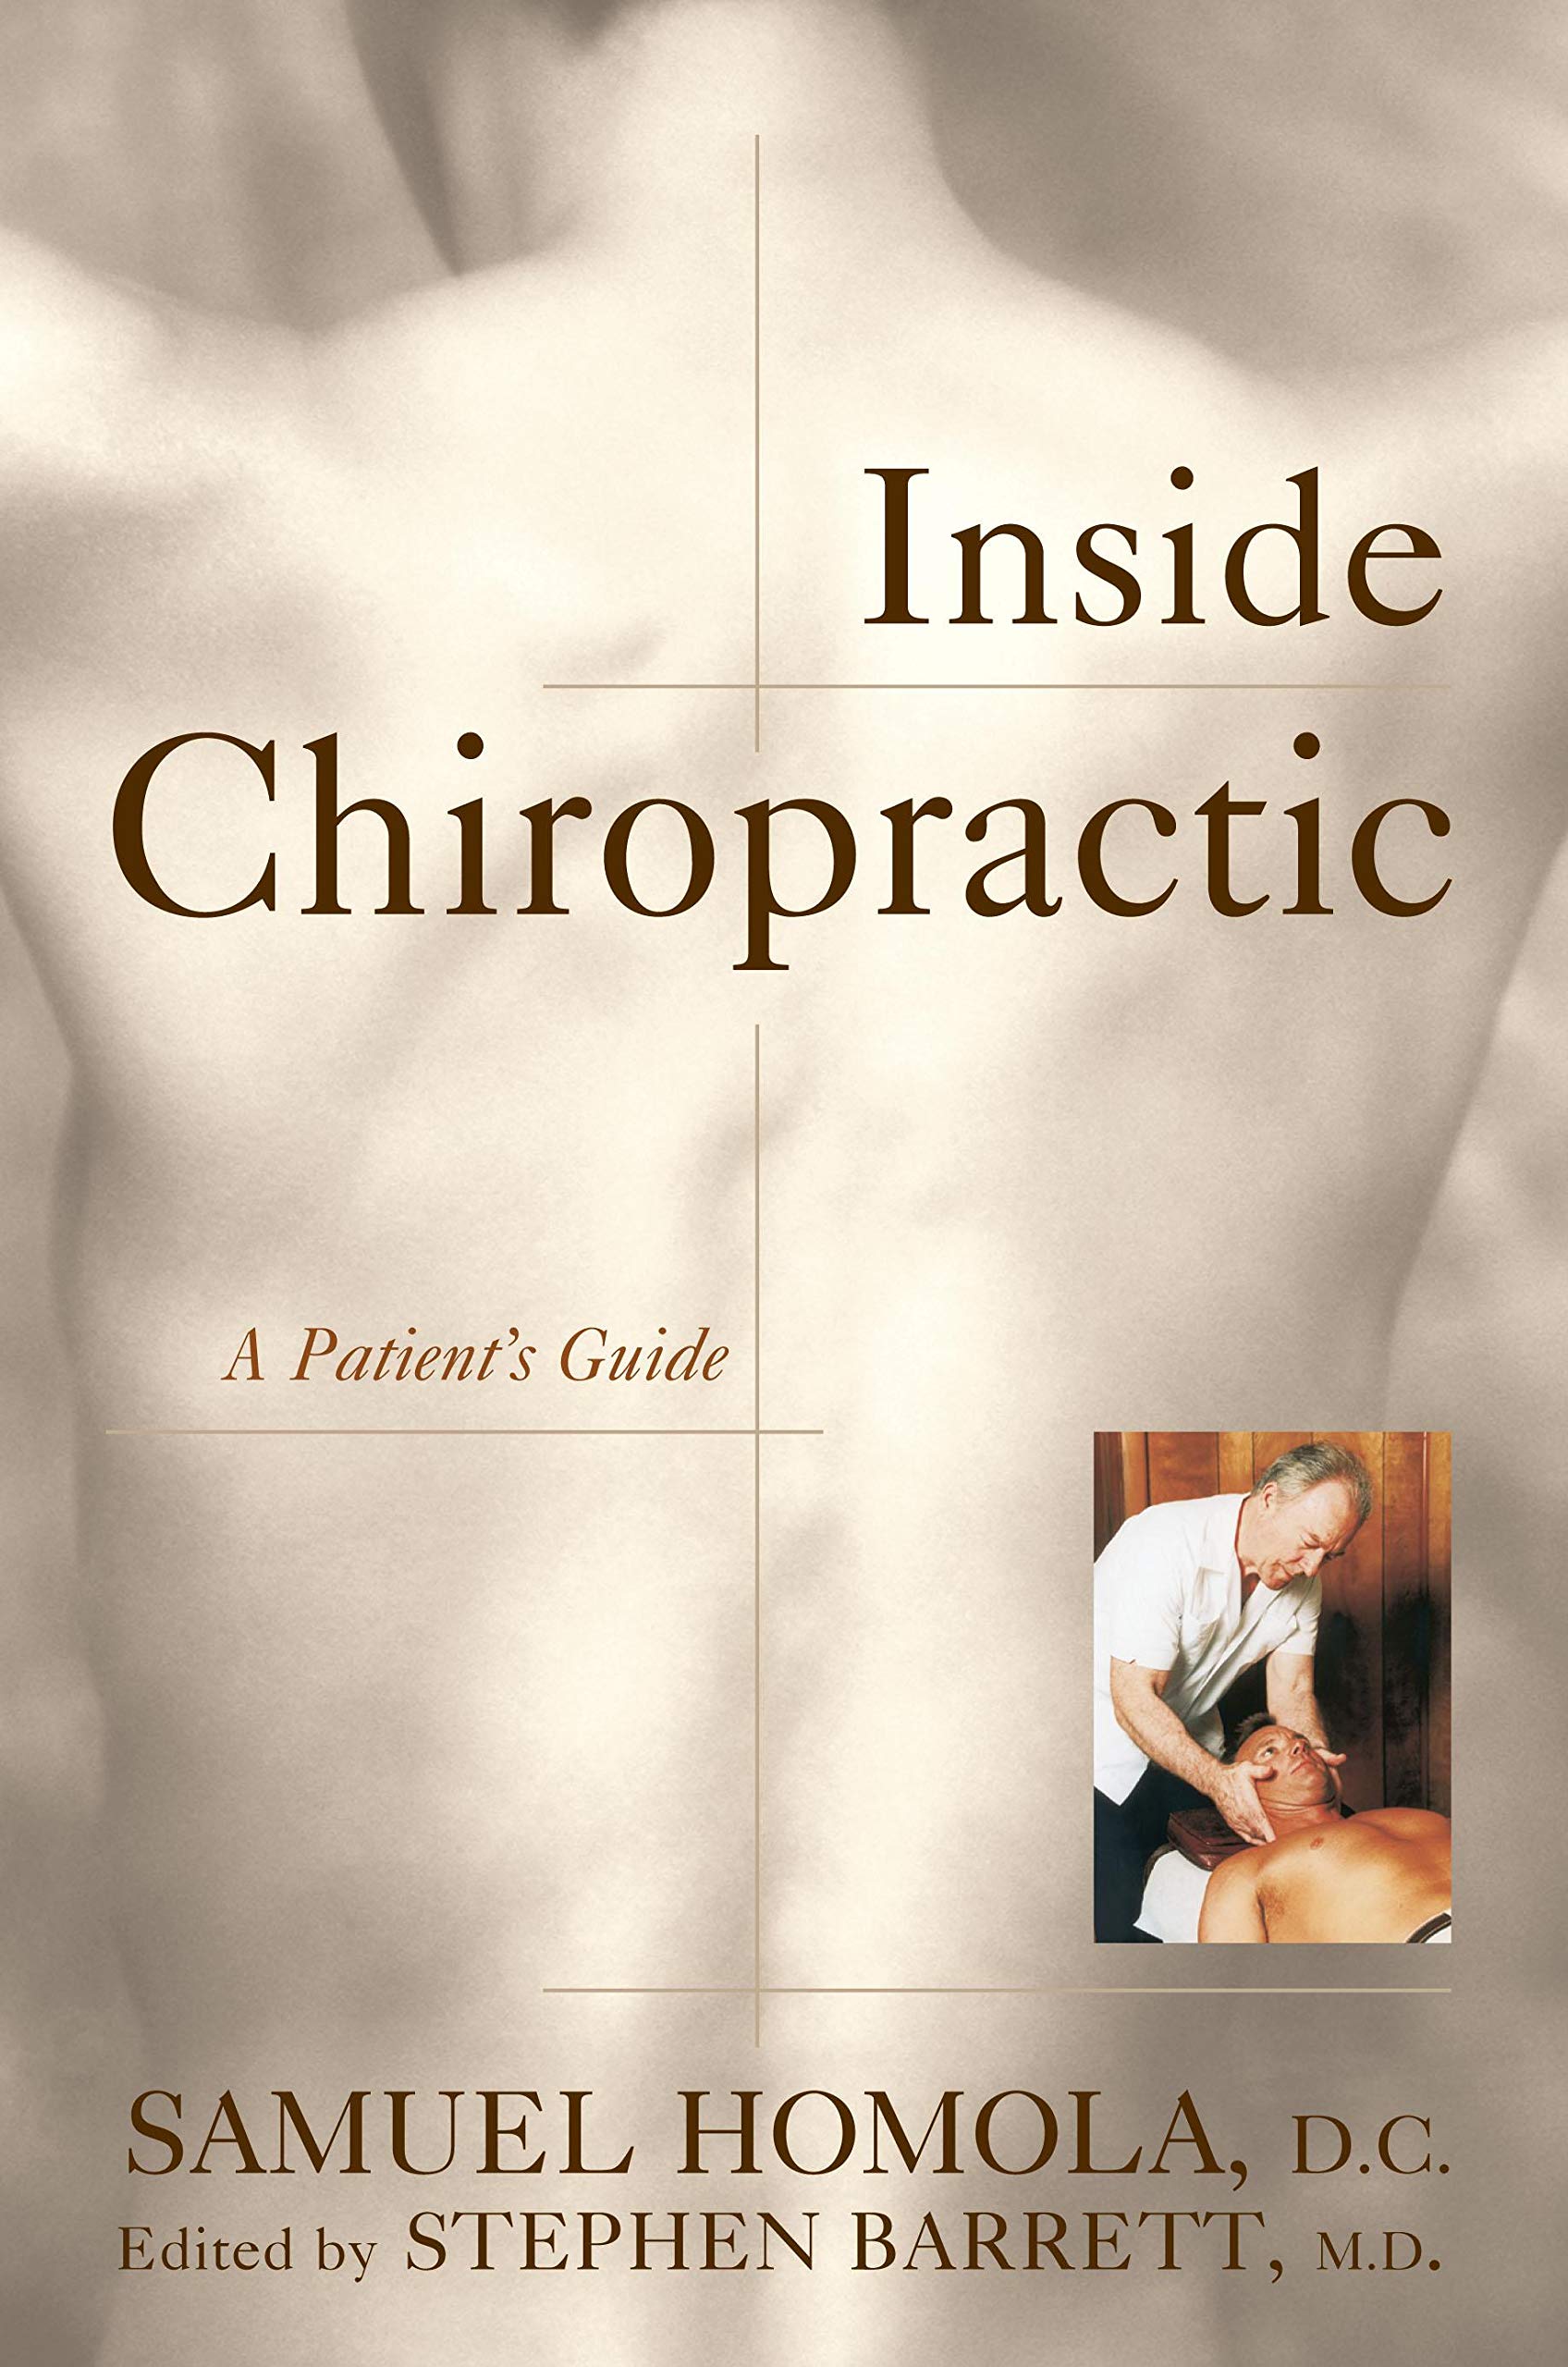 Inside Chiropractic by Samuel Homola